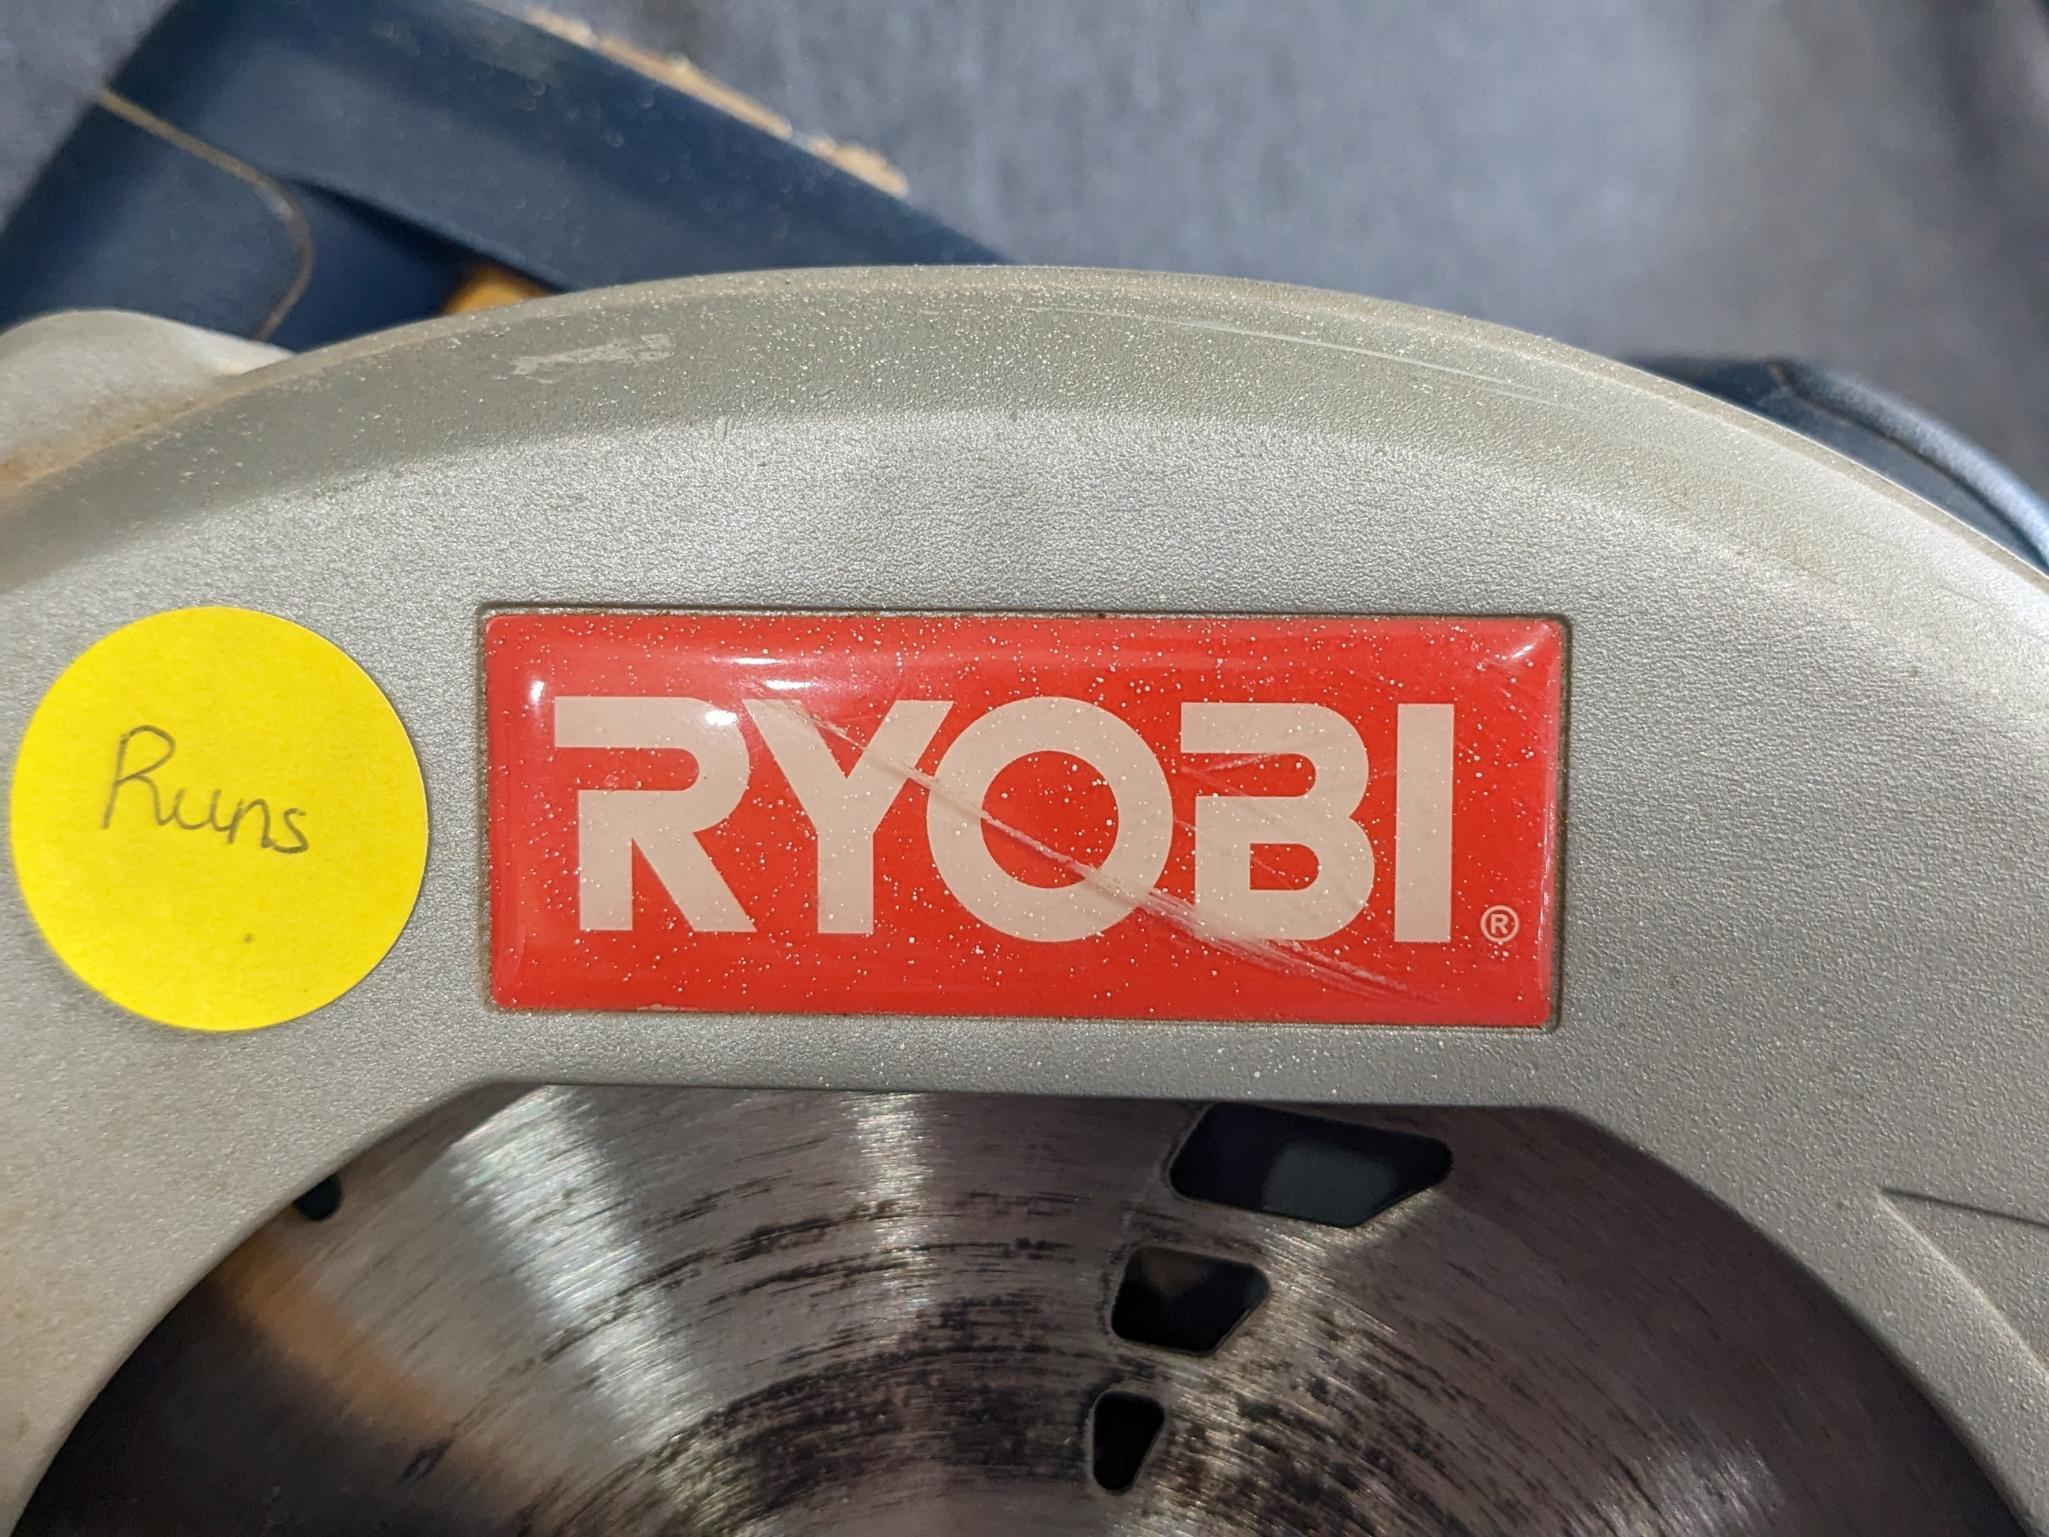 Ryobi 12amp 7-1/4" circular saw model CSB121 has a carbide blade, runs, and includes two extra